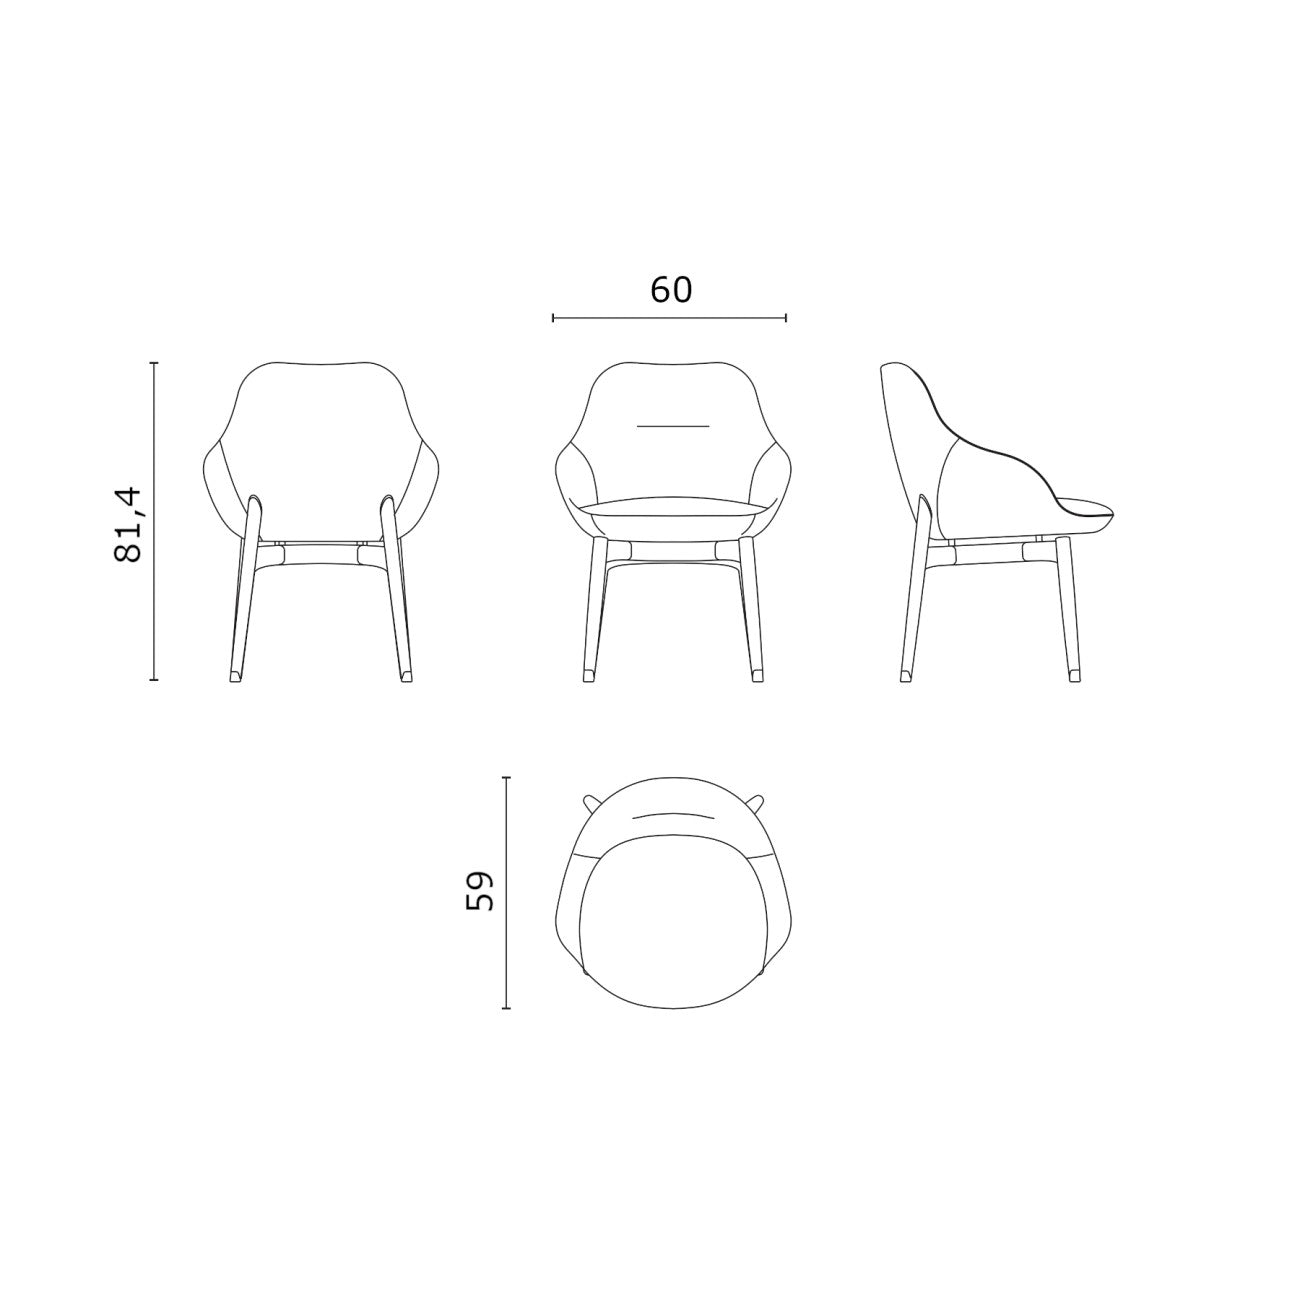 CPRN HOMOOD | Royal Velvet Dining Chair w. Arms  - $5,478.00